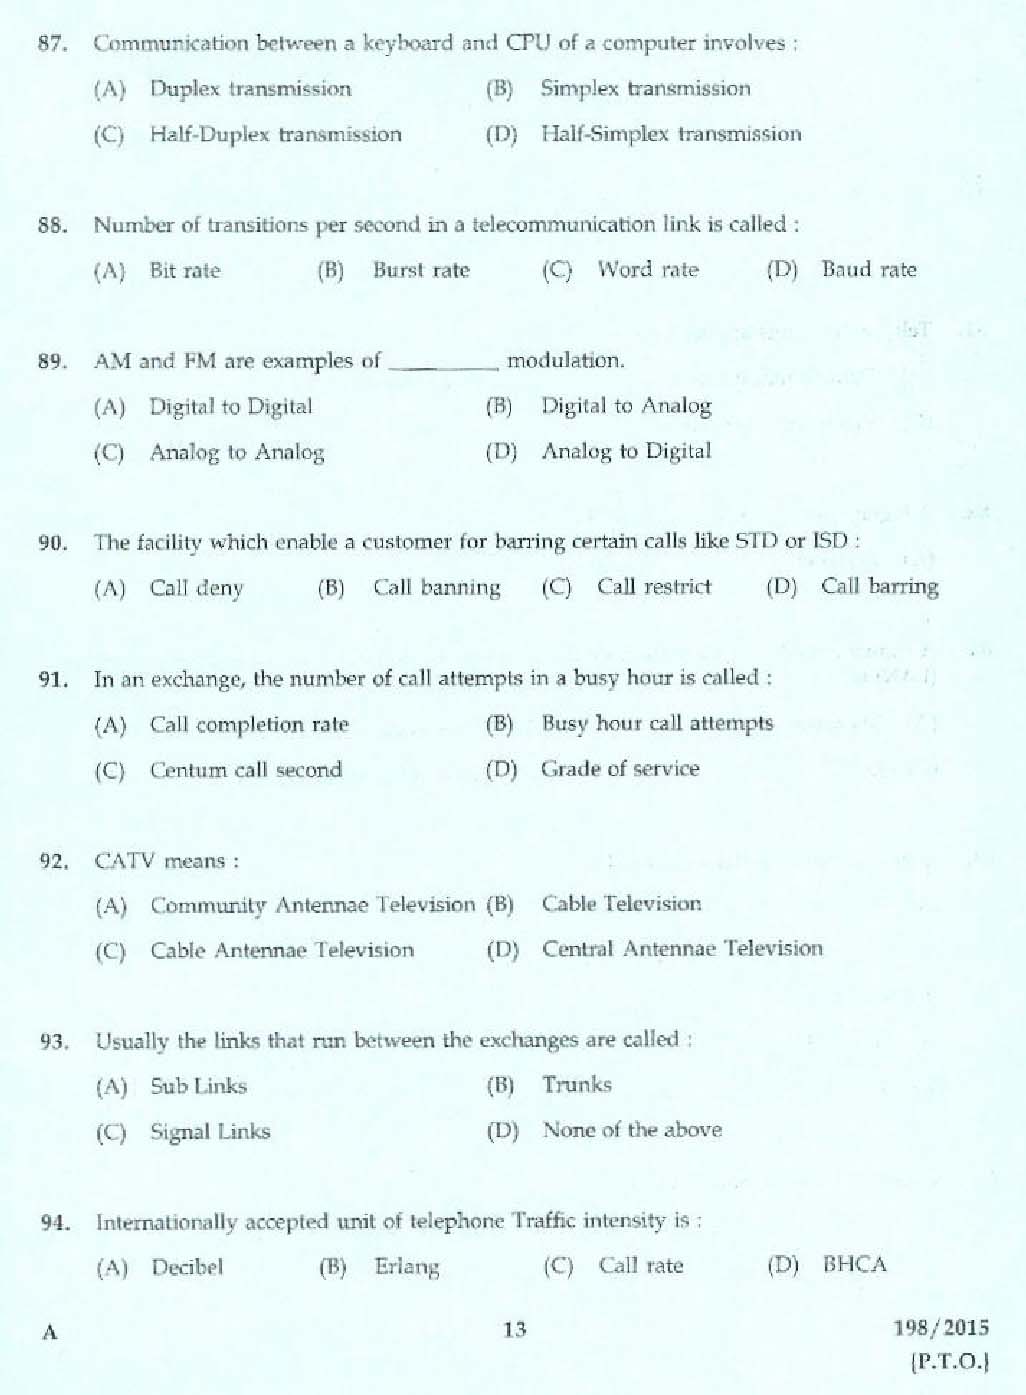 Kerala PSC Telephone Operator Exam Question Code 1982015 11